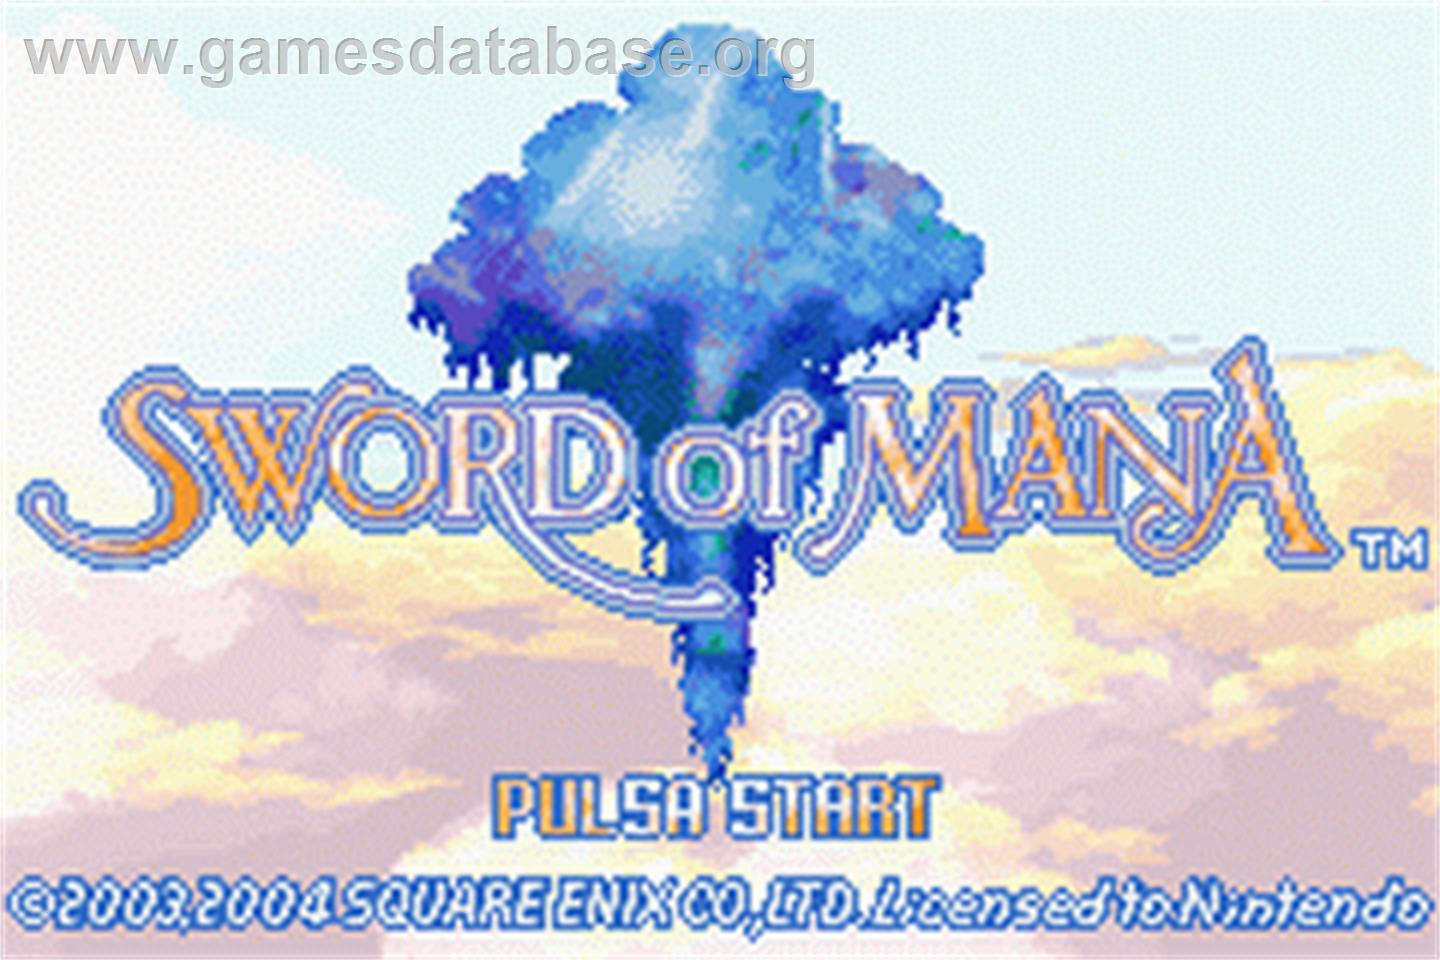 Sword of Mana - Nintendo Game Boy Advance - Artwork - Title Screen